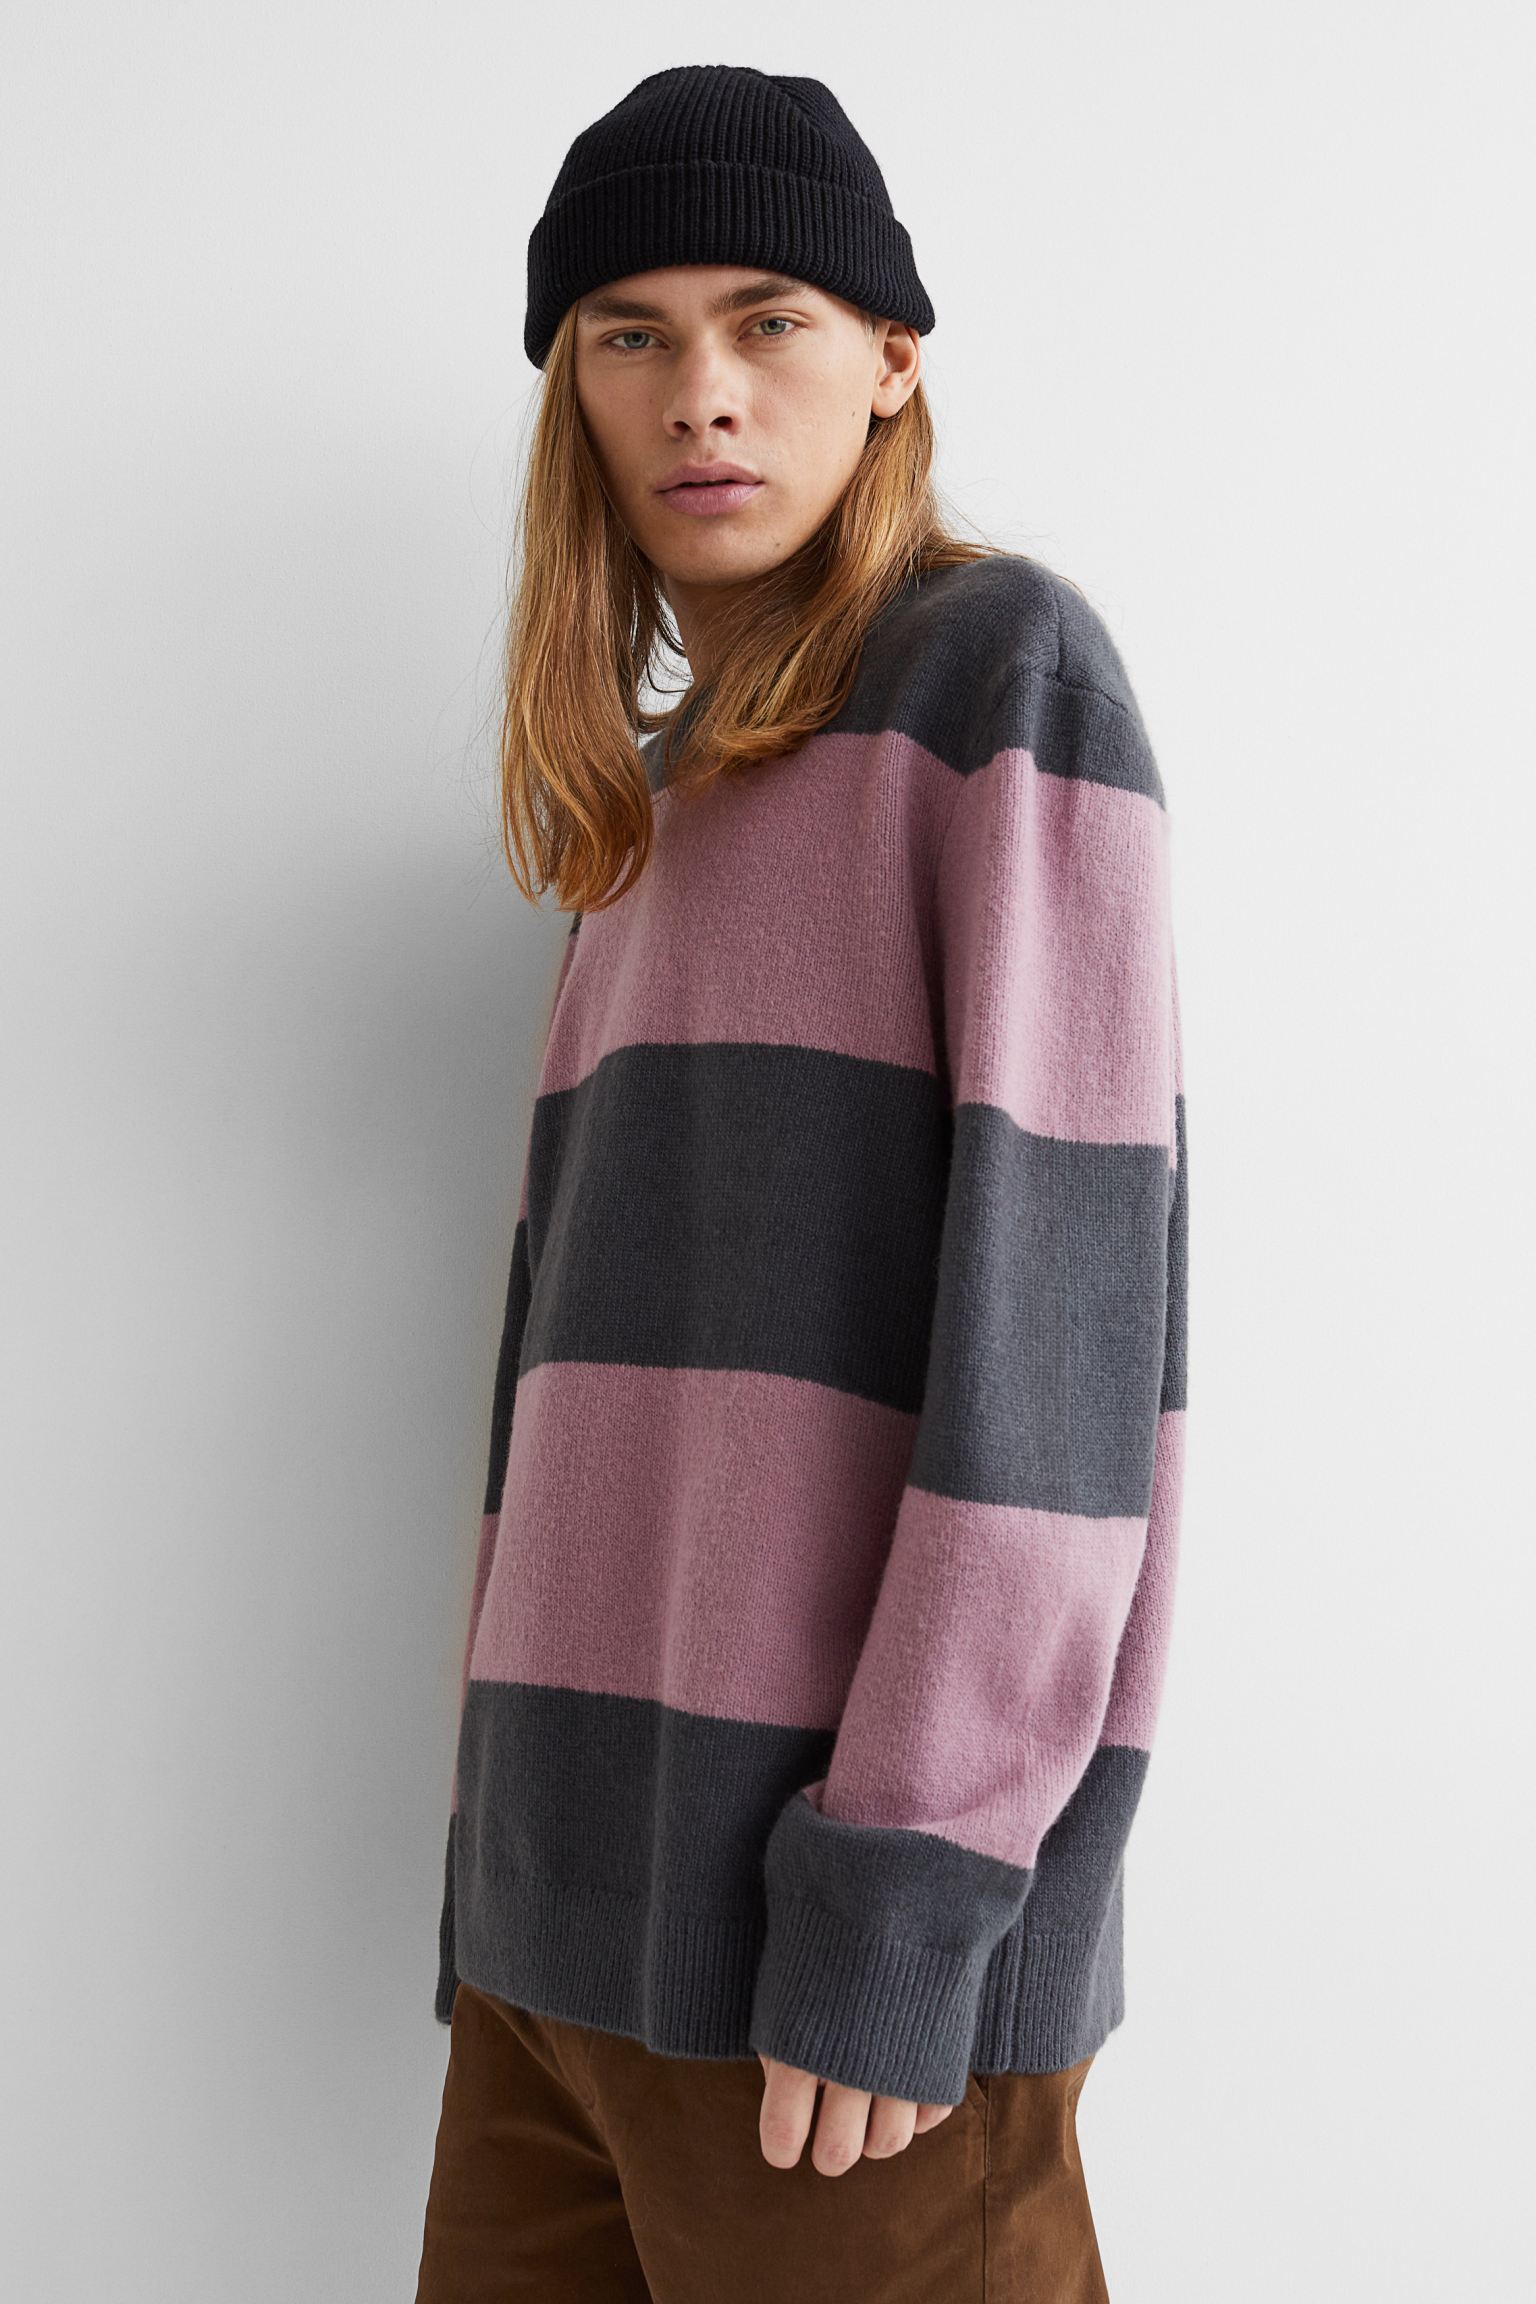 H&M wool sweater.